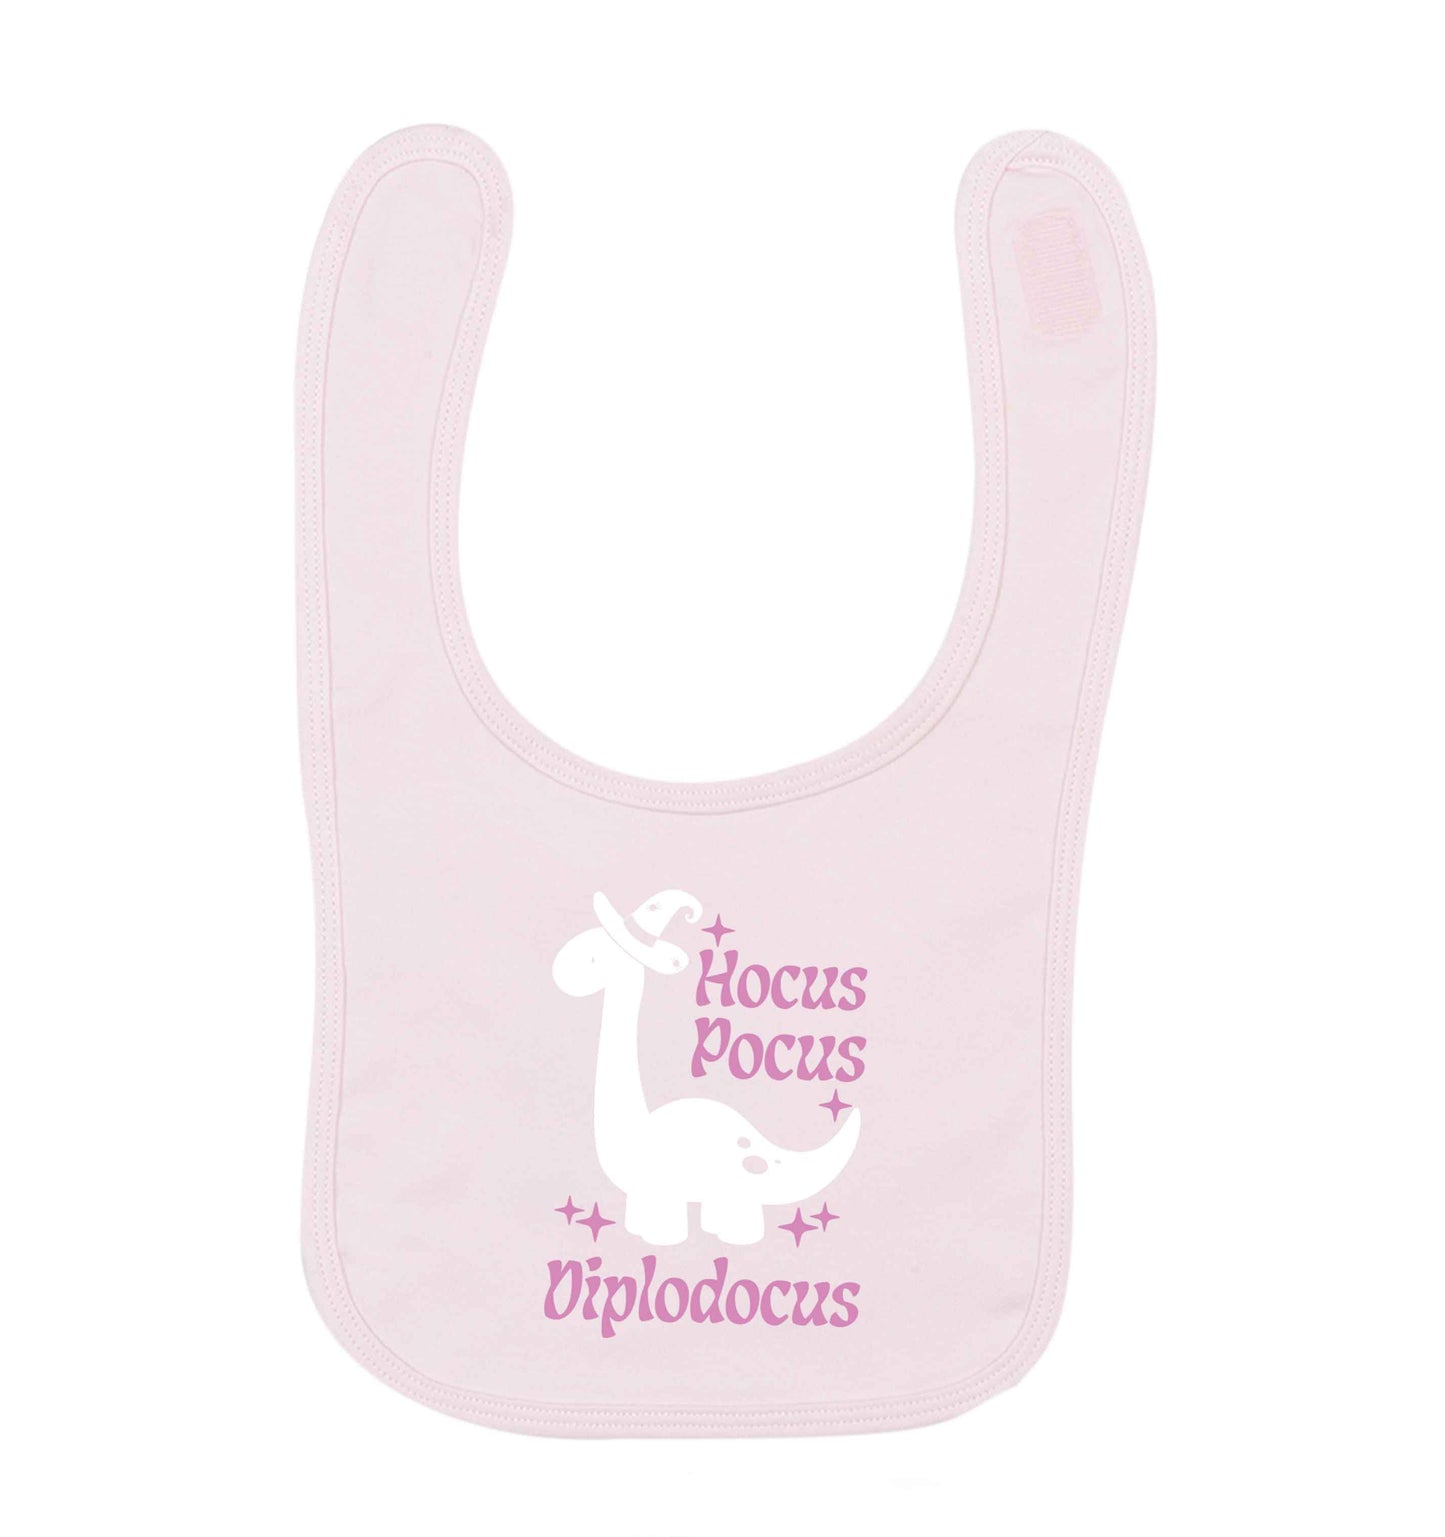 Hocus pocus diplodocus Kit pale pink baby bib